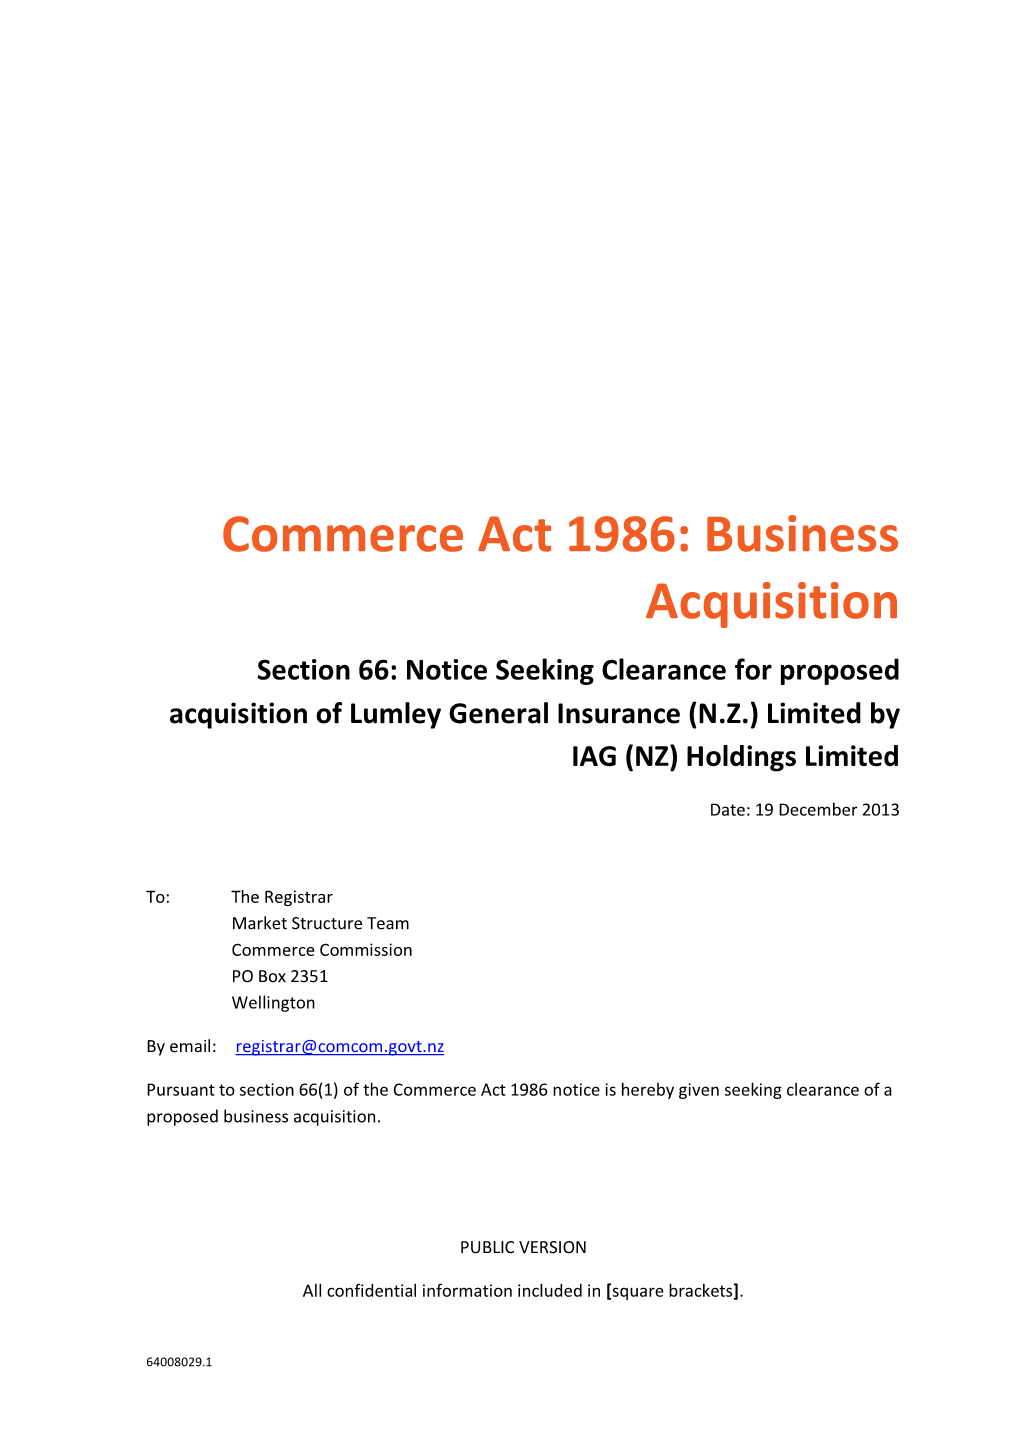 Commerce Act 1986: Business Acquisition